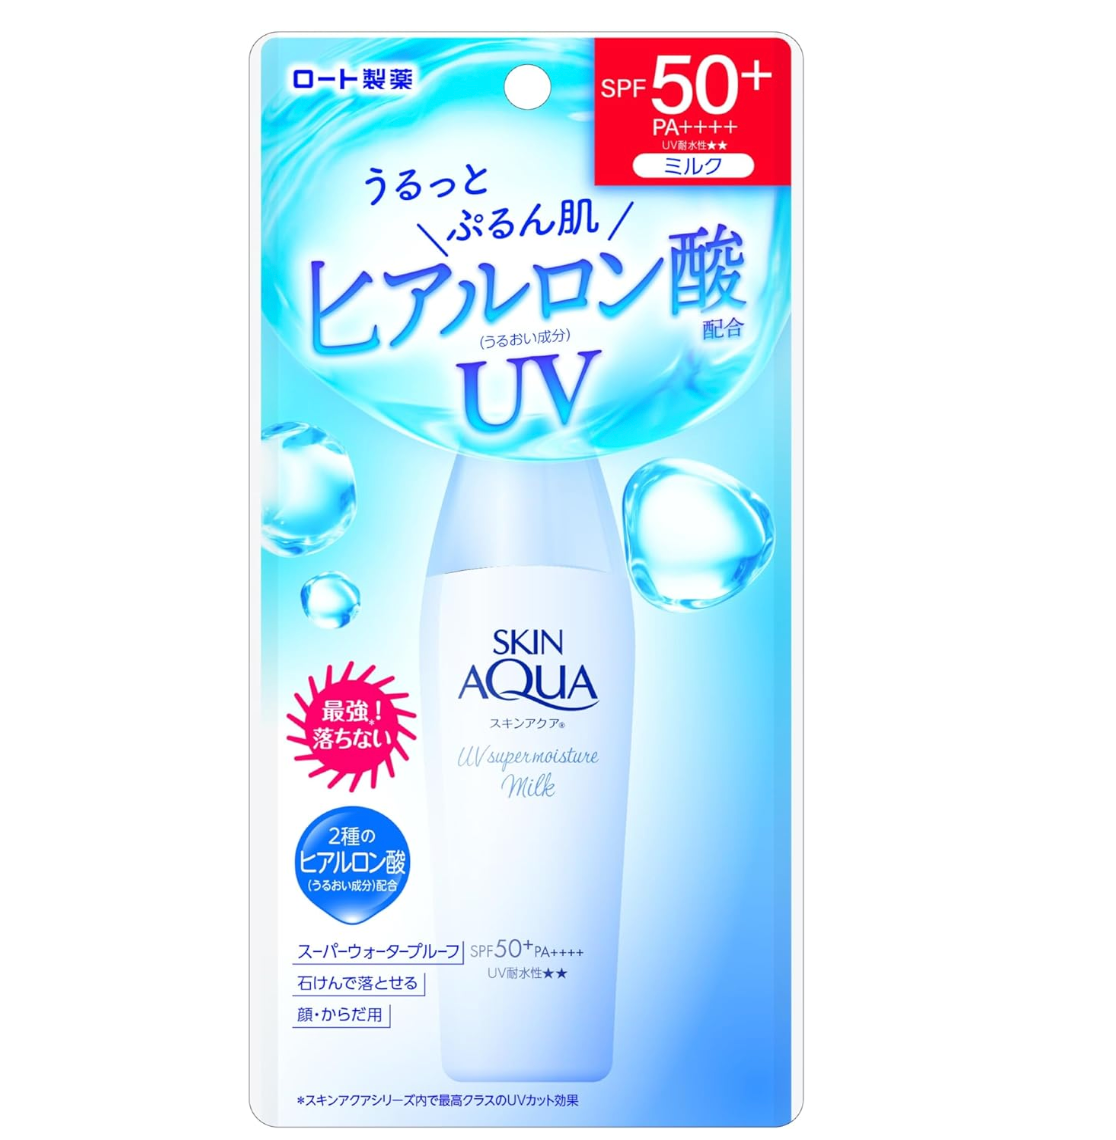 Skin Aqua Super Moisture Milk 40ml